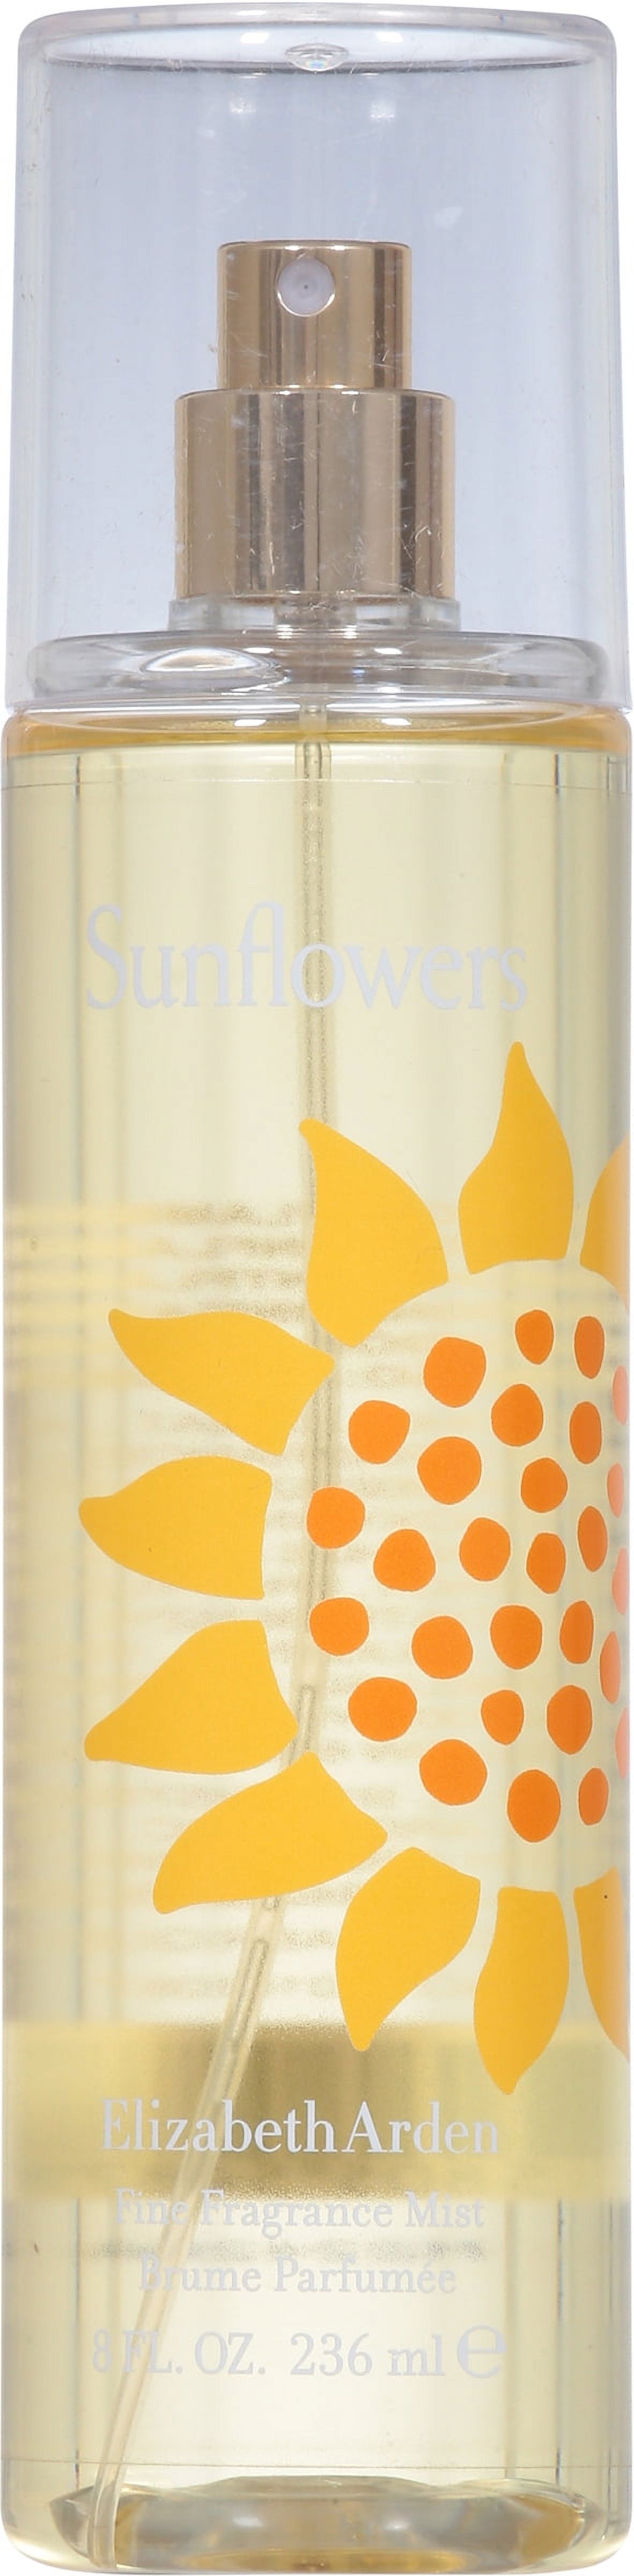 Elizabeth Arden Sunflowers Fine Fragrance Body Spray for Women, 8 oz - image 2 of 3